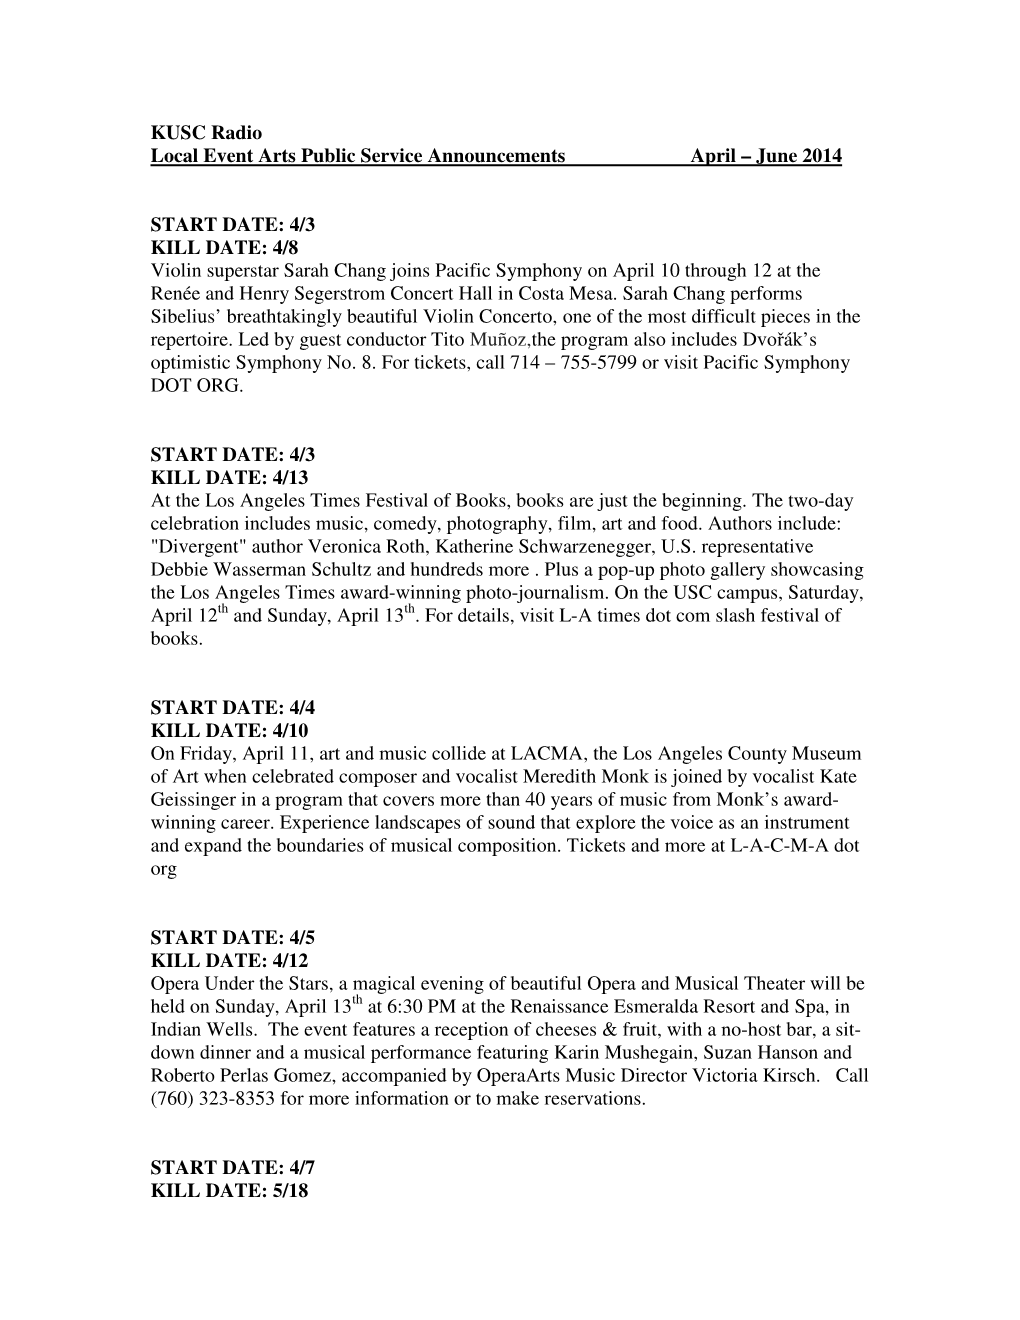 KUSC Radio Local Event Arts Public Service Announcements April – June 2014